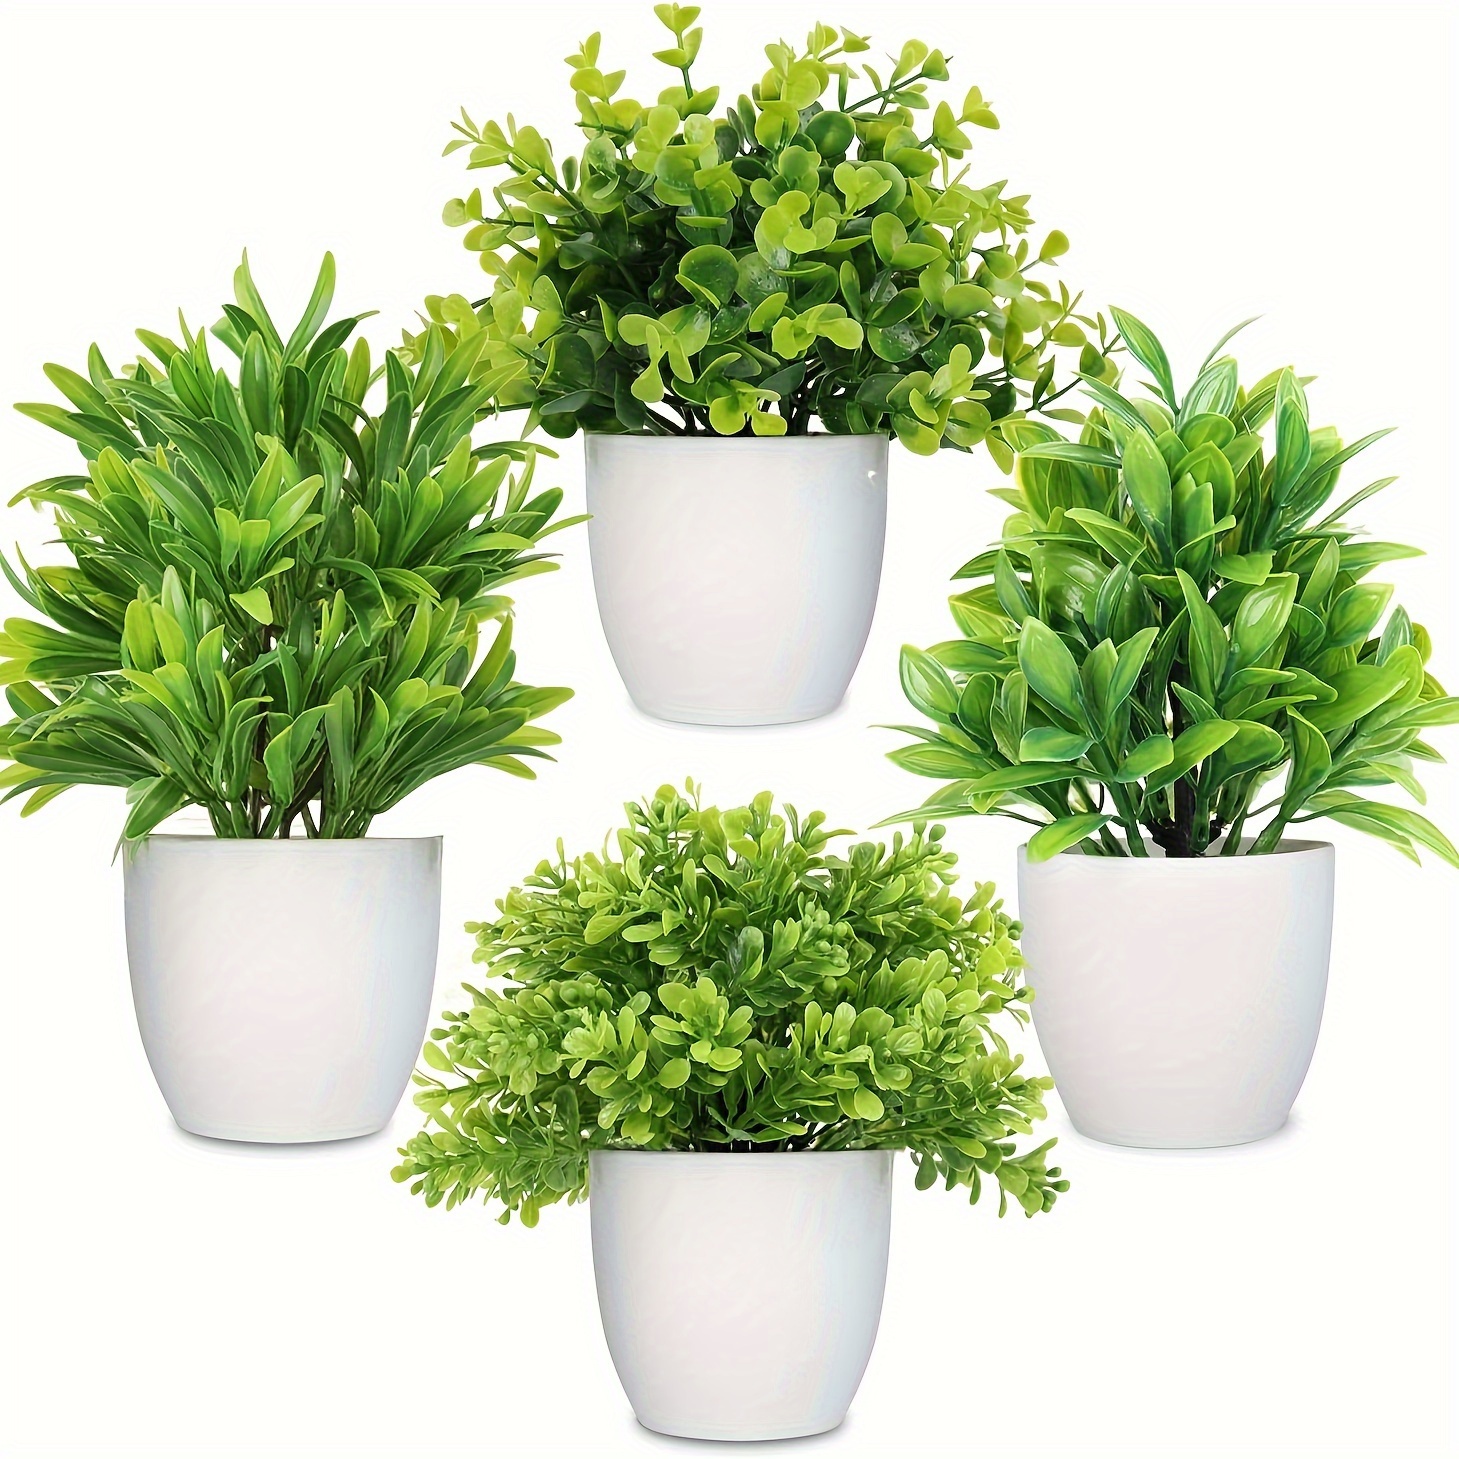 

4 Pack Artificial Eucalyptus Potted Plants, Faux Decorative Grass Plant With White Plastic Pot Suitable For Home Decor, Indoor, Office, Desk, Table Decoration